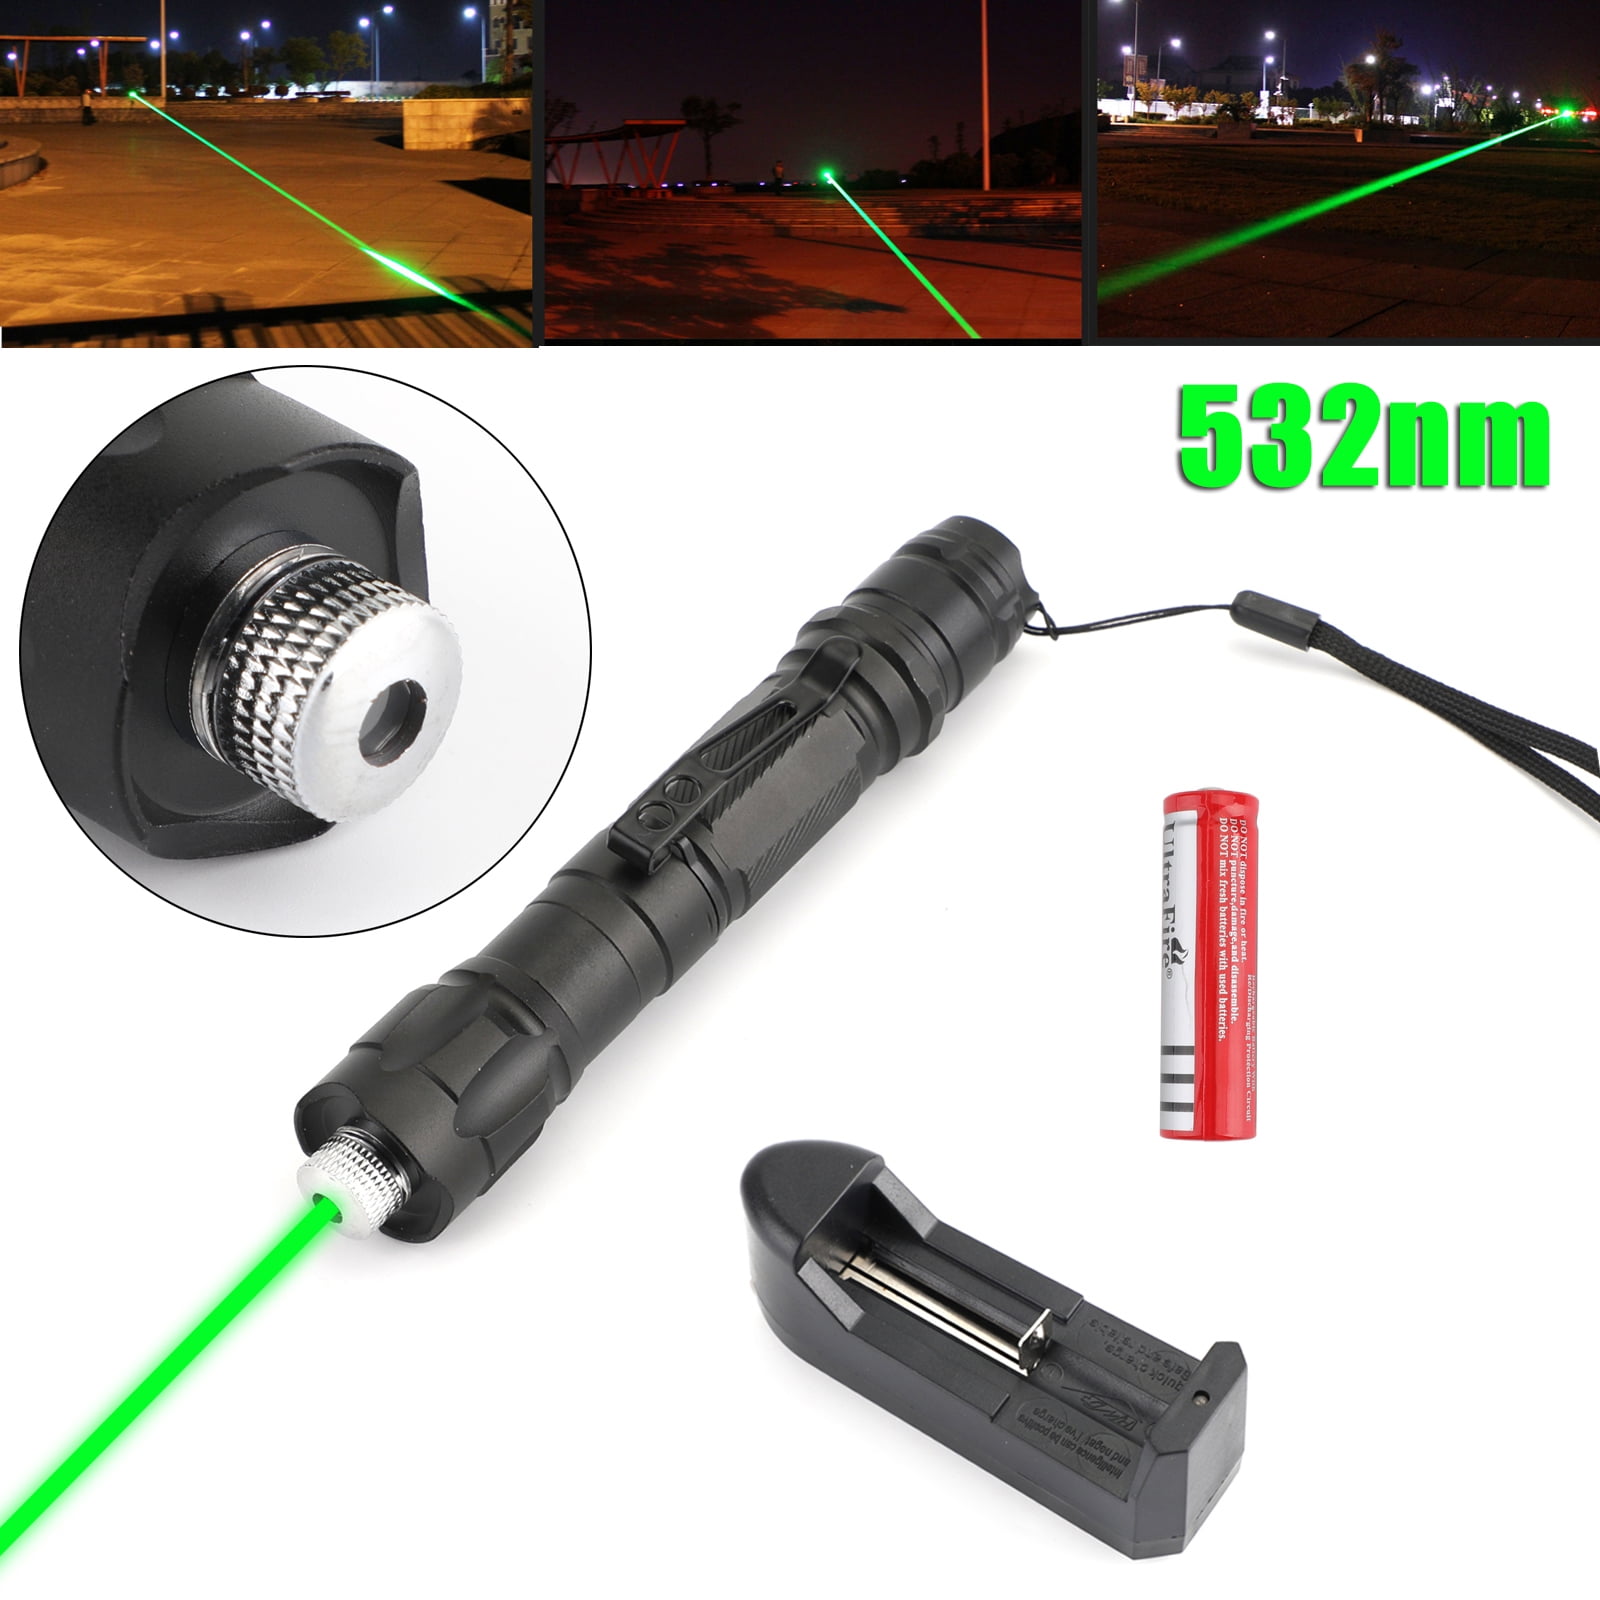 10miles Laser Pen Pointer Green 532NM 303 Lazer Light Visible Beam UK 